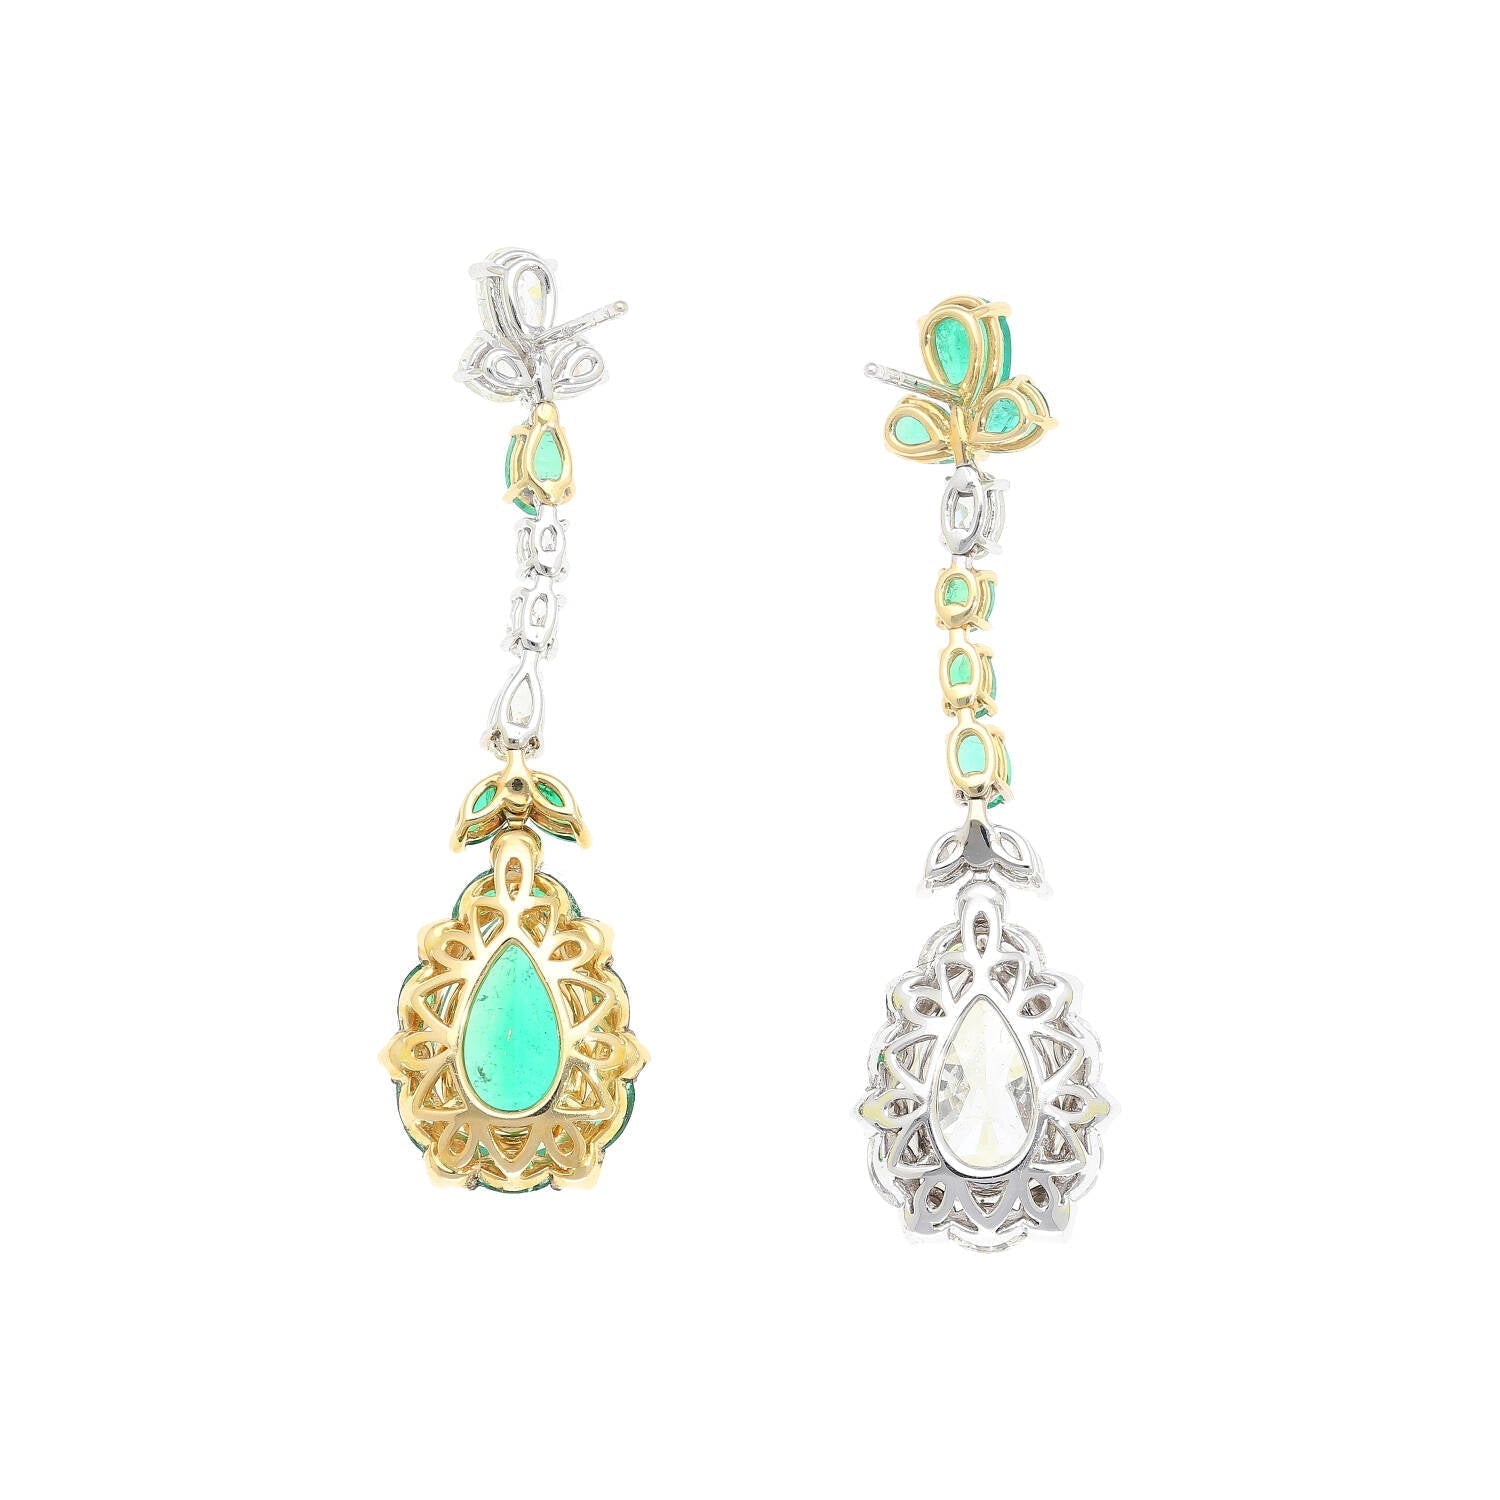 10 Carat Natural Emerald and Diamond Mirrored Drop Earrings in 18K Gold-Earrings-ASSAY